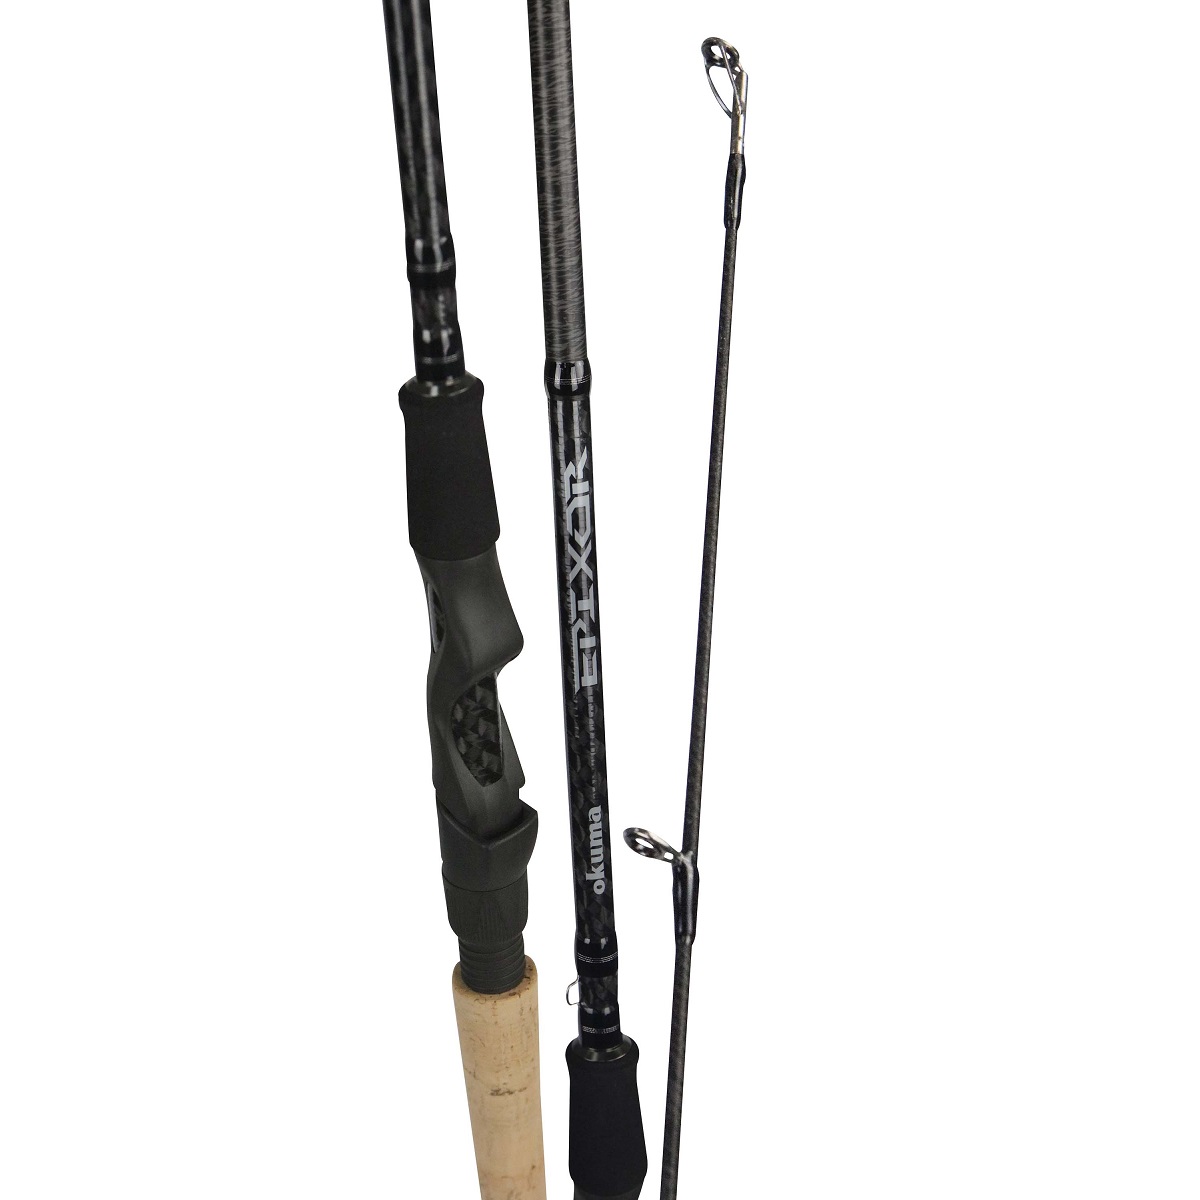 Epixor Rod  OKUMA Fishing Rods and Reels - OKUMA FISHING TACKLE CO., LTD.